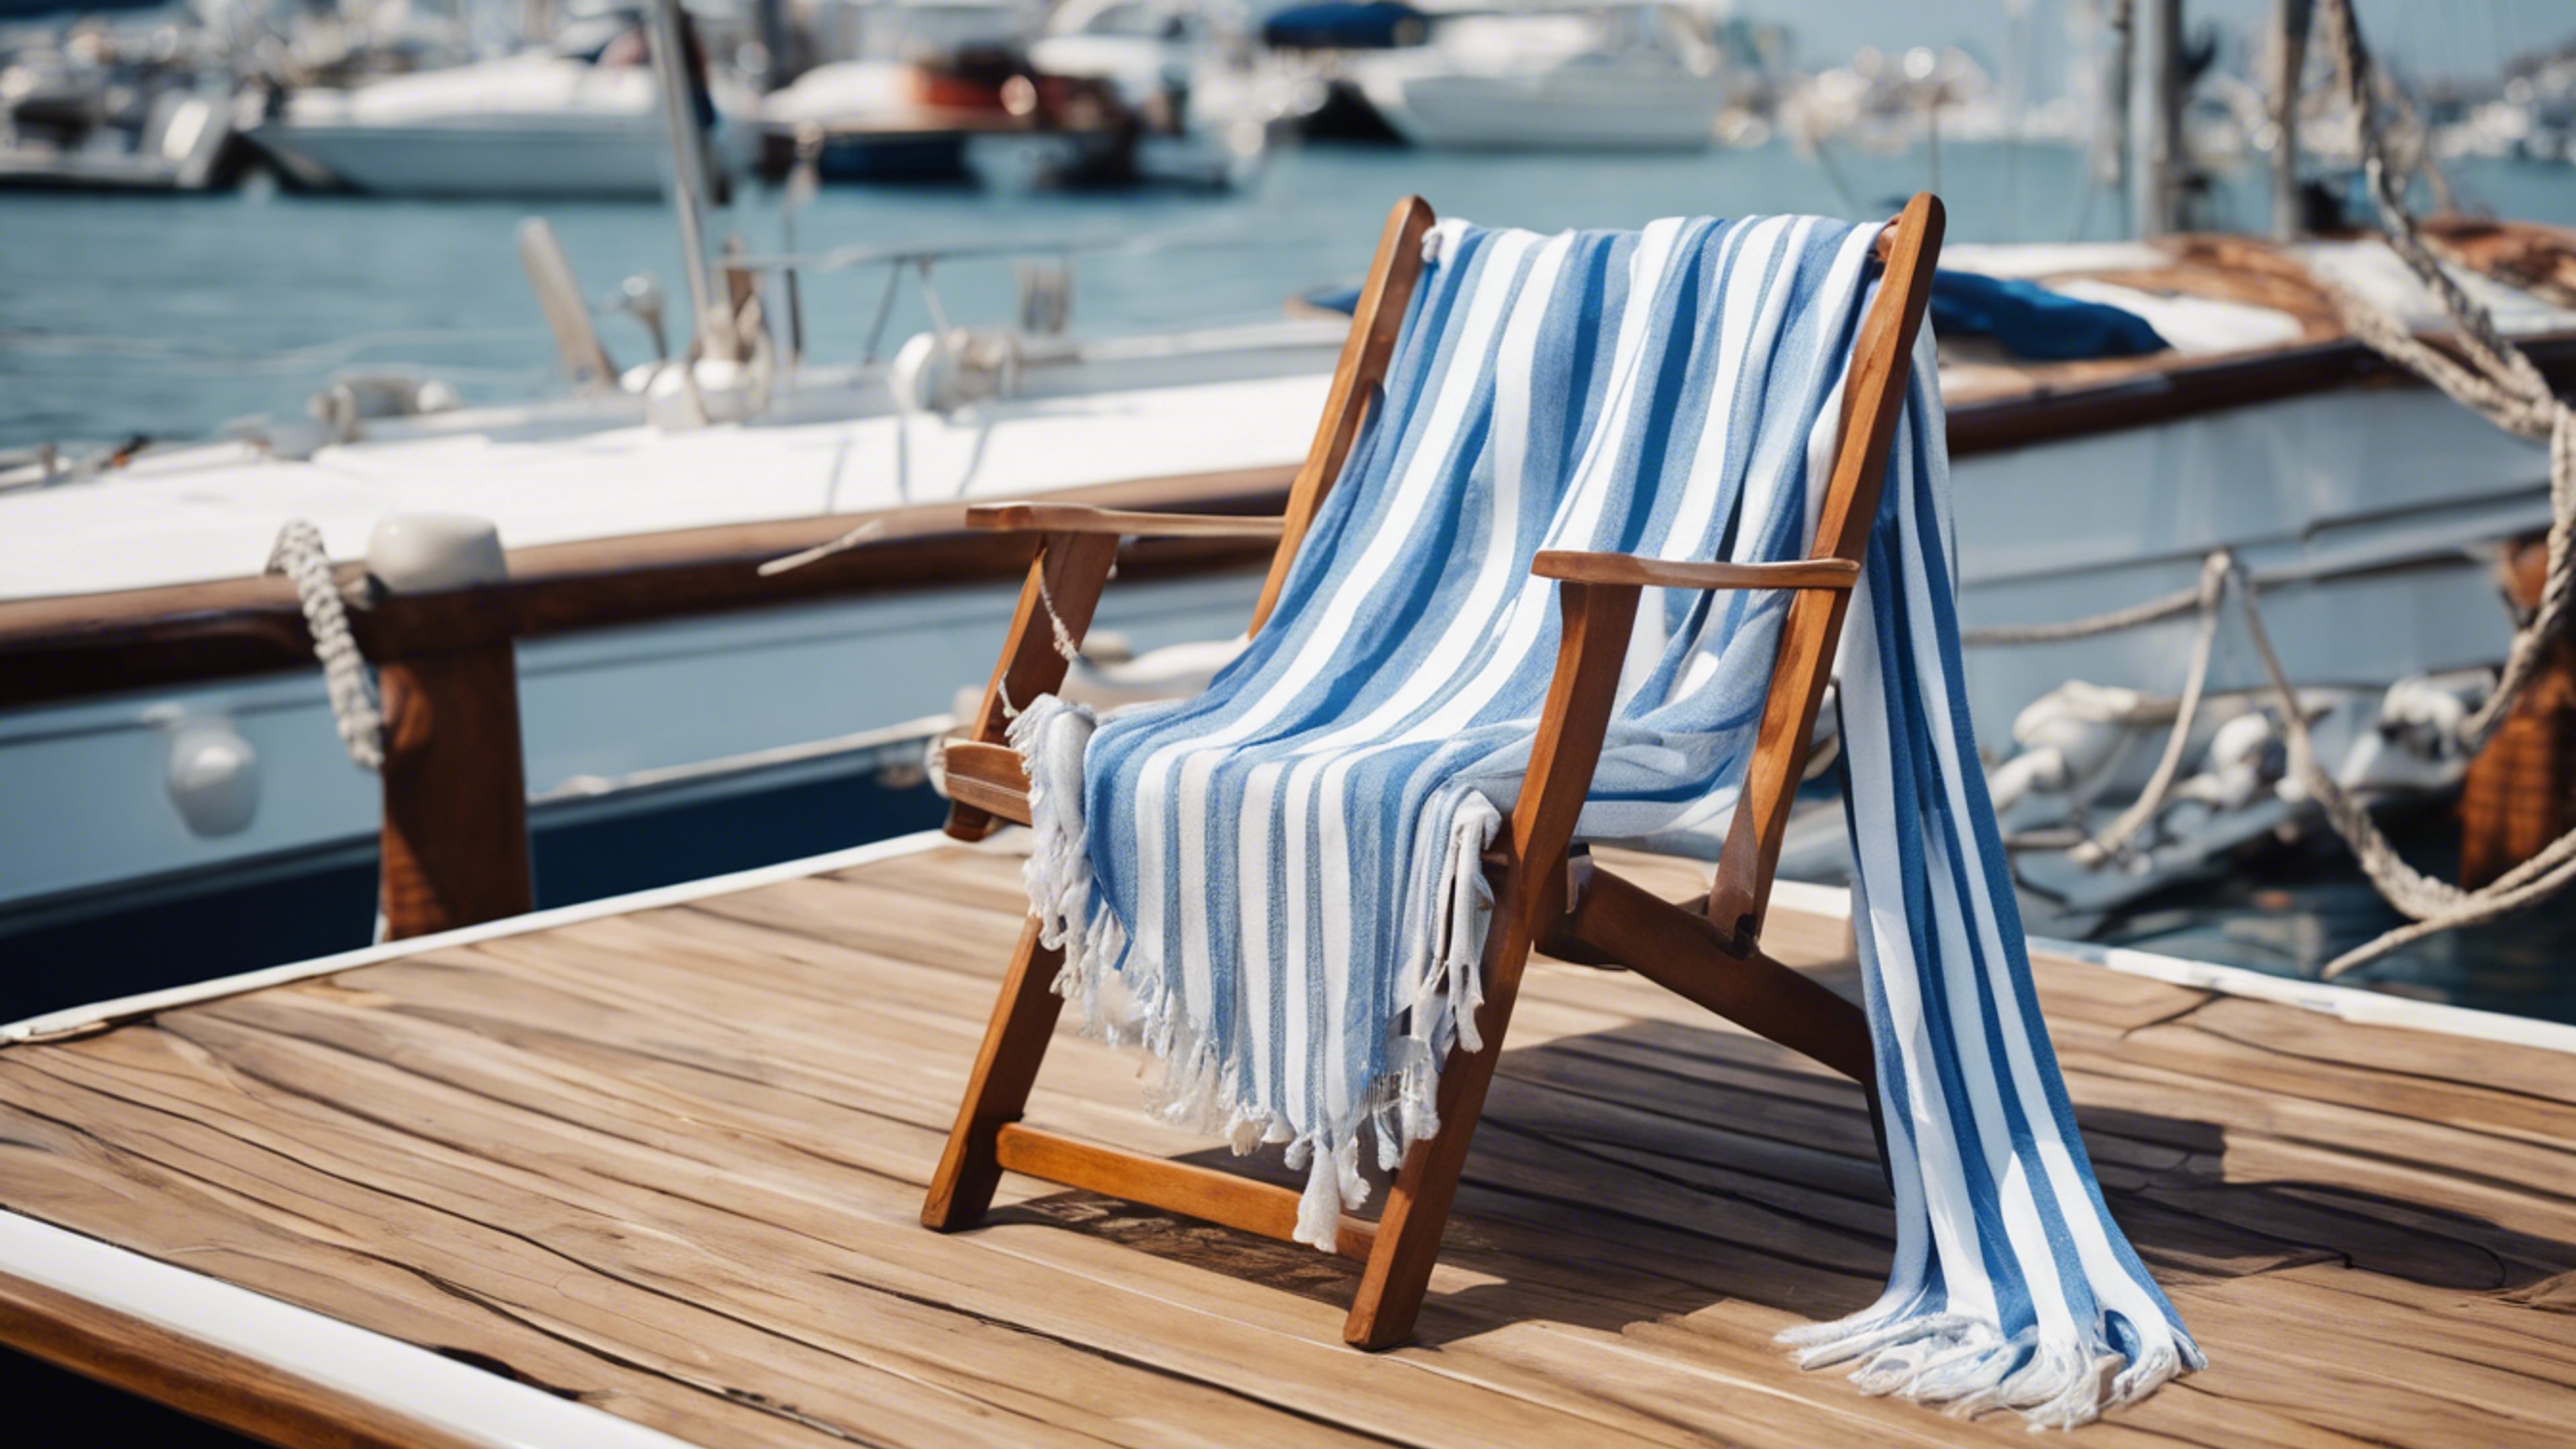 Preppy blue and white striped shawl draped over a teak deck chair on a sailboat. Tapeet[8e59a438a9aa4e06a25d]